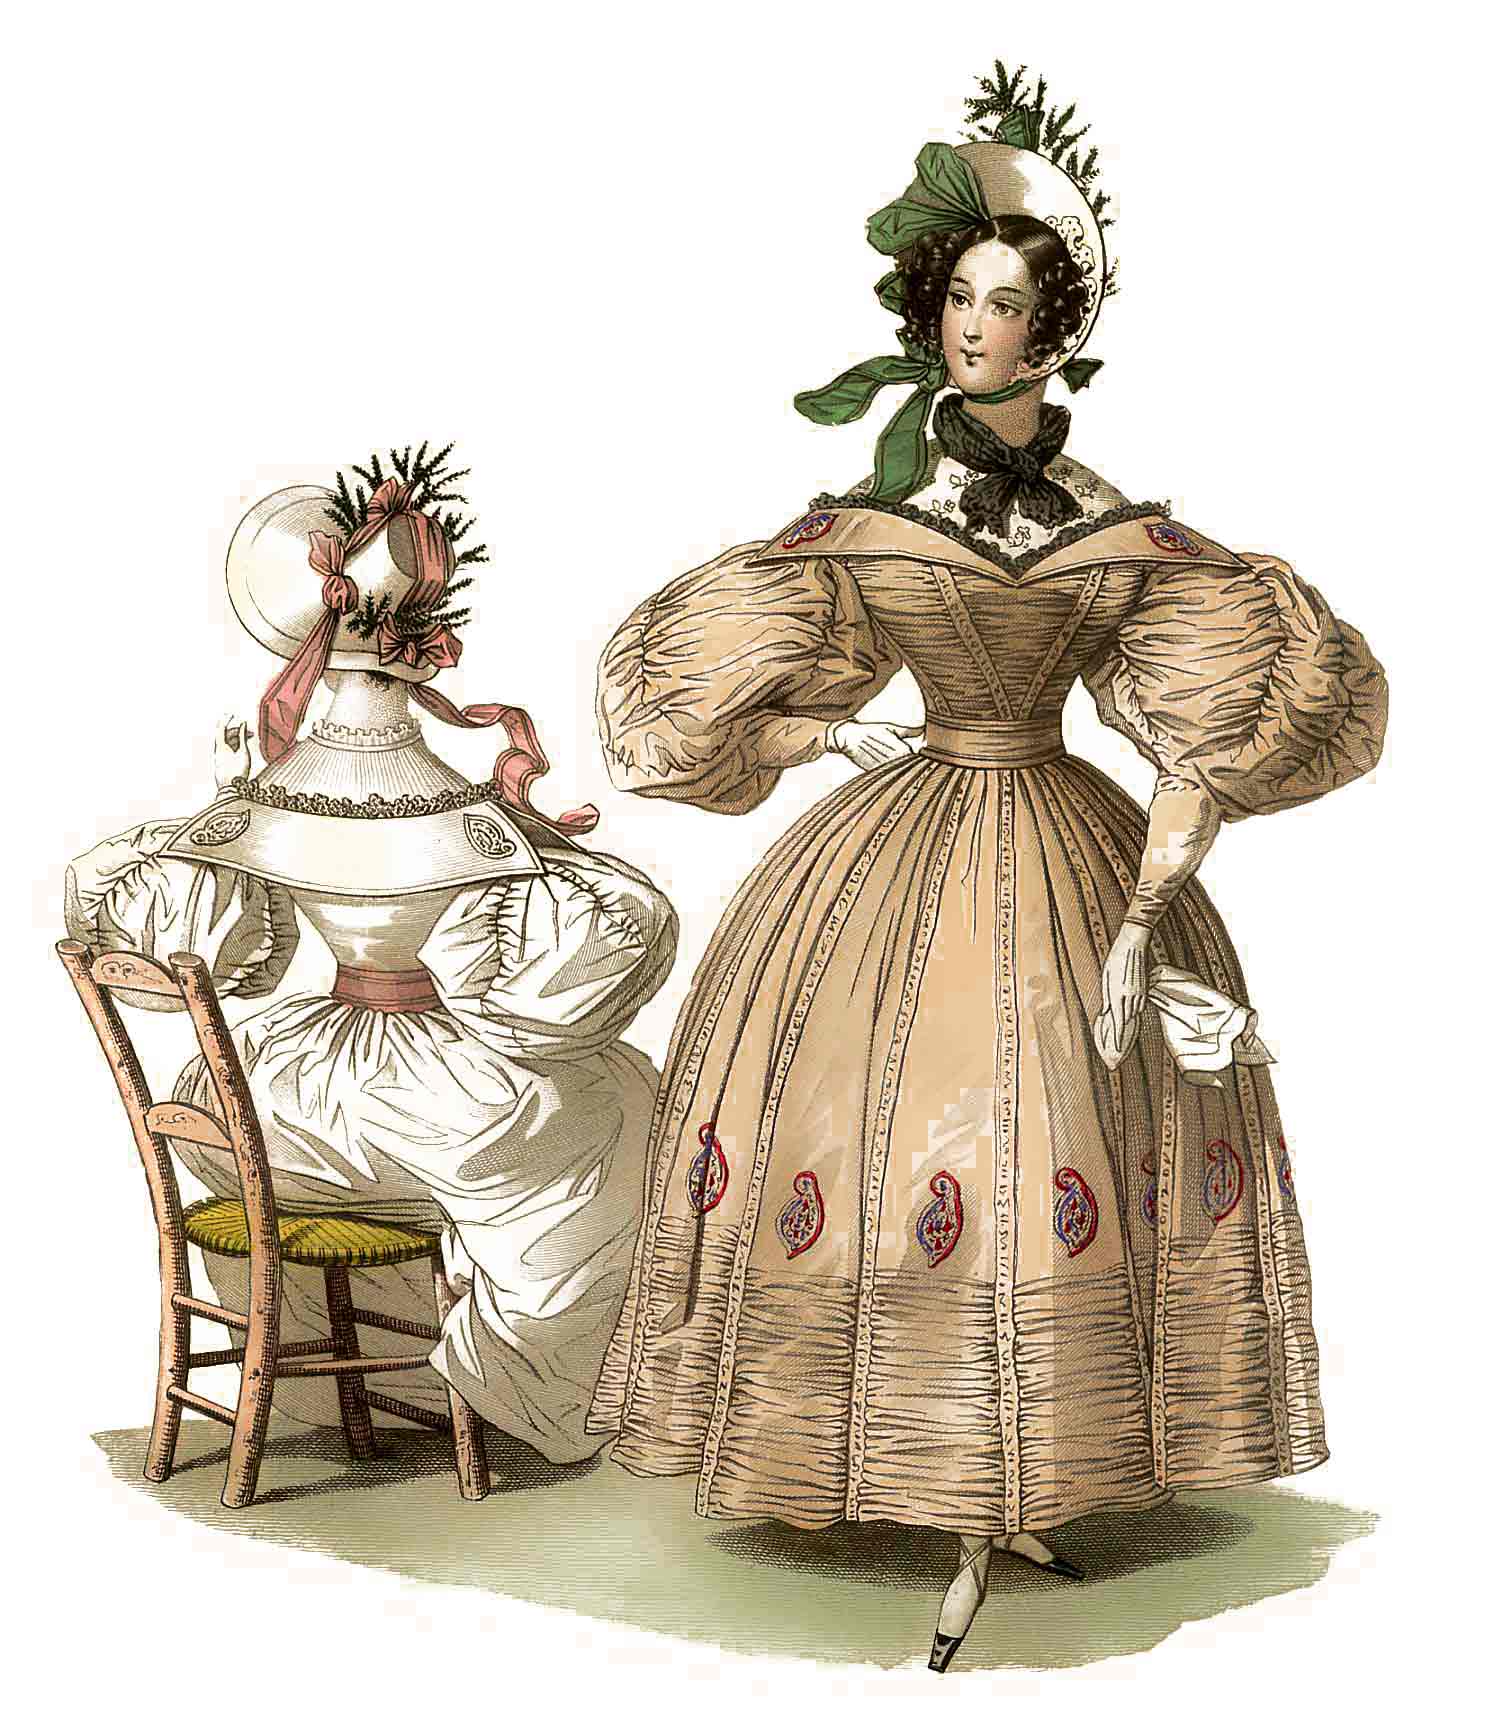 Memsahibs in India slavishly followed fashions from the latest French catalogues. 1834 styles.